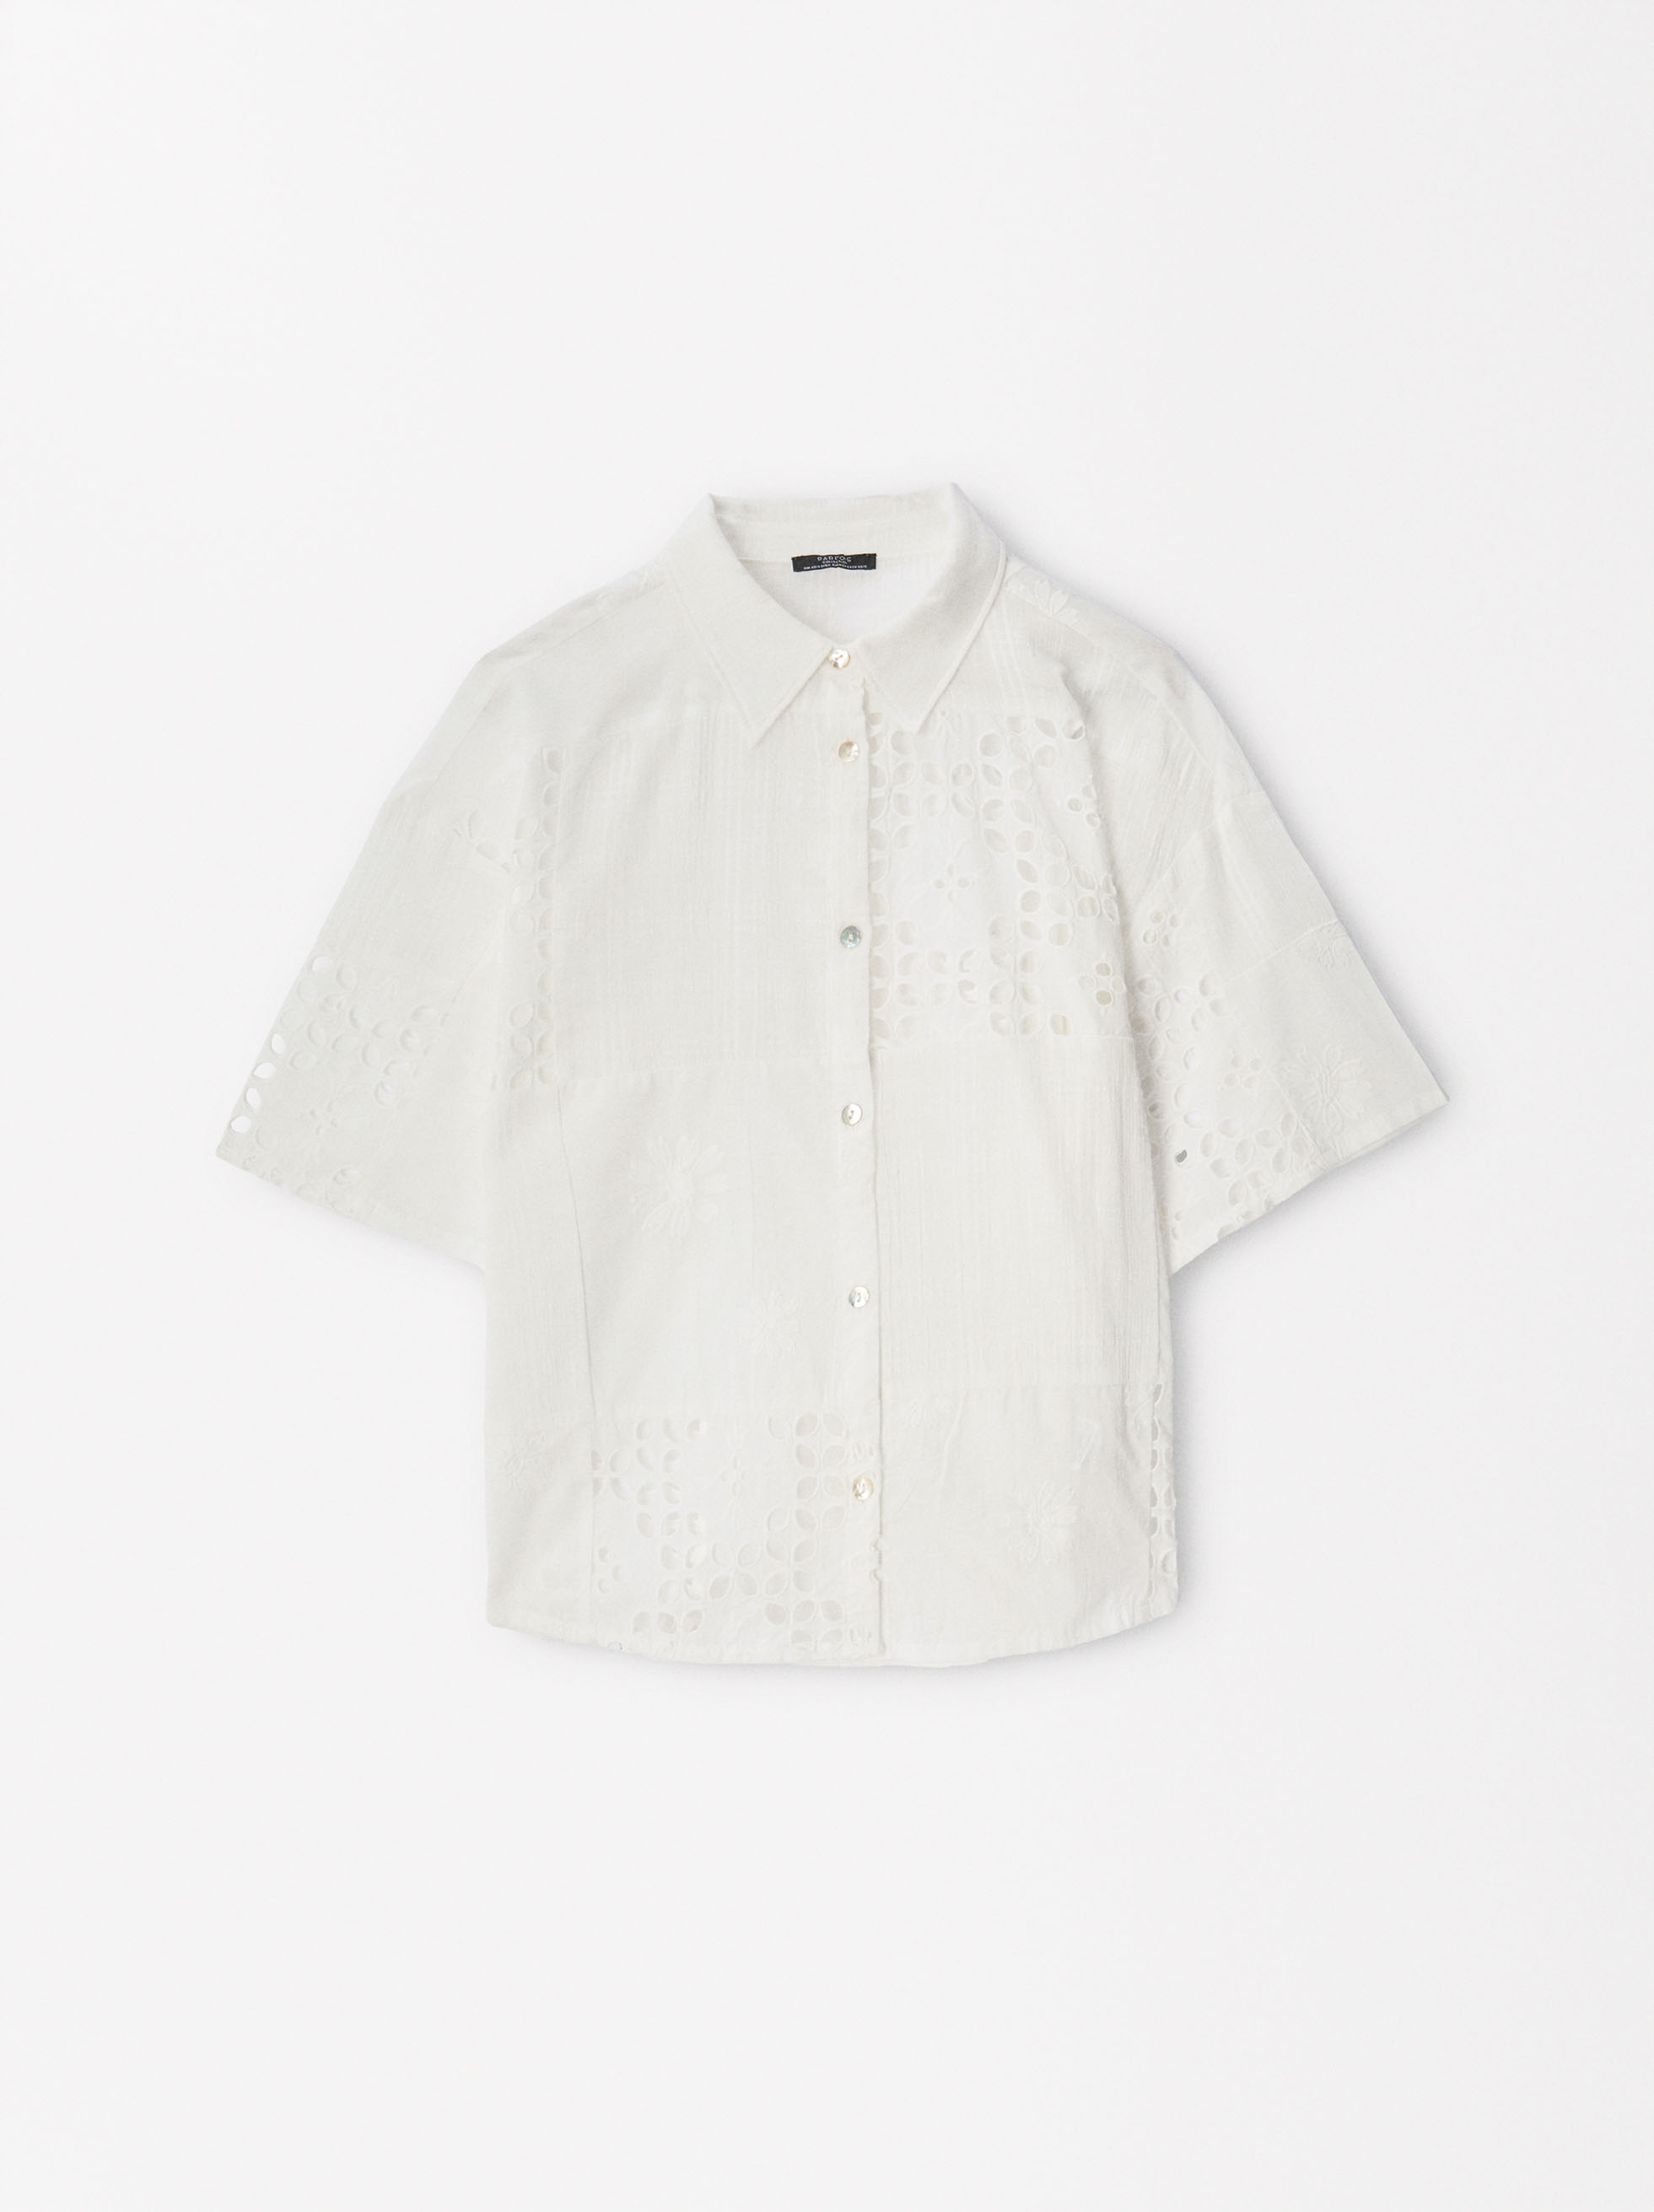 100% Cotton Shirt image number 0.0